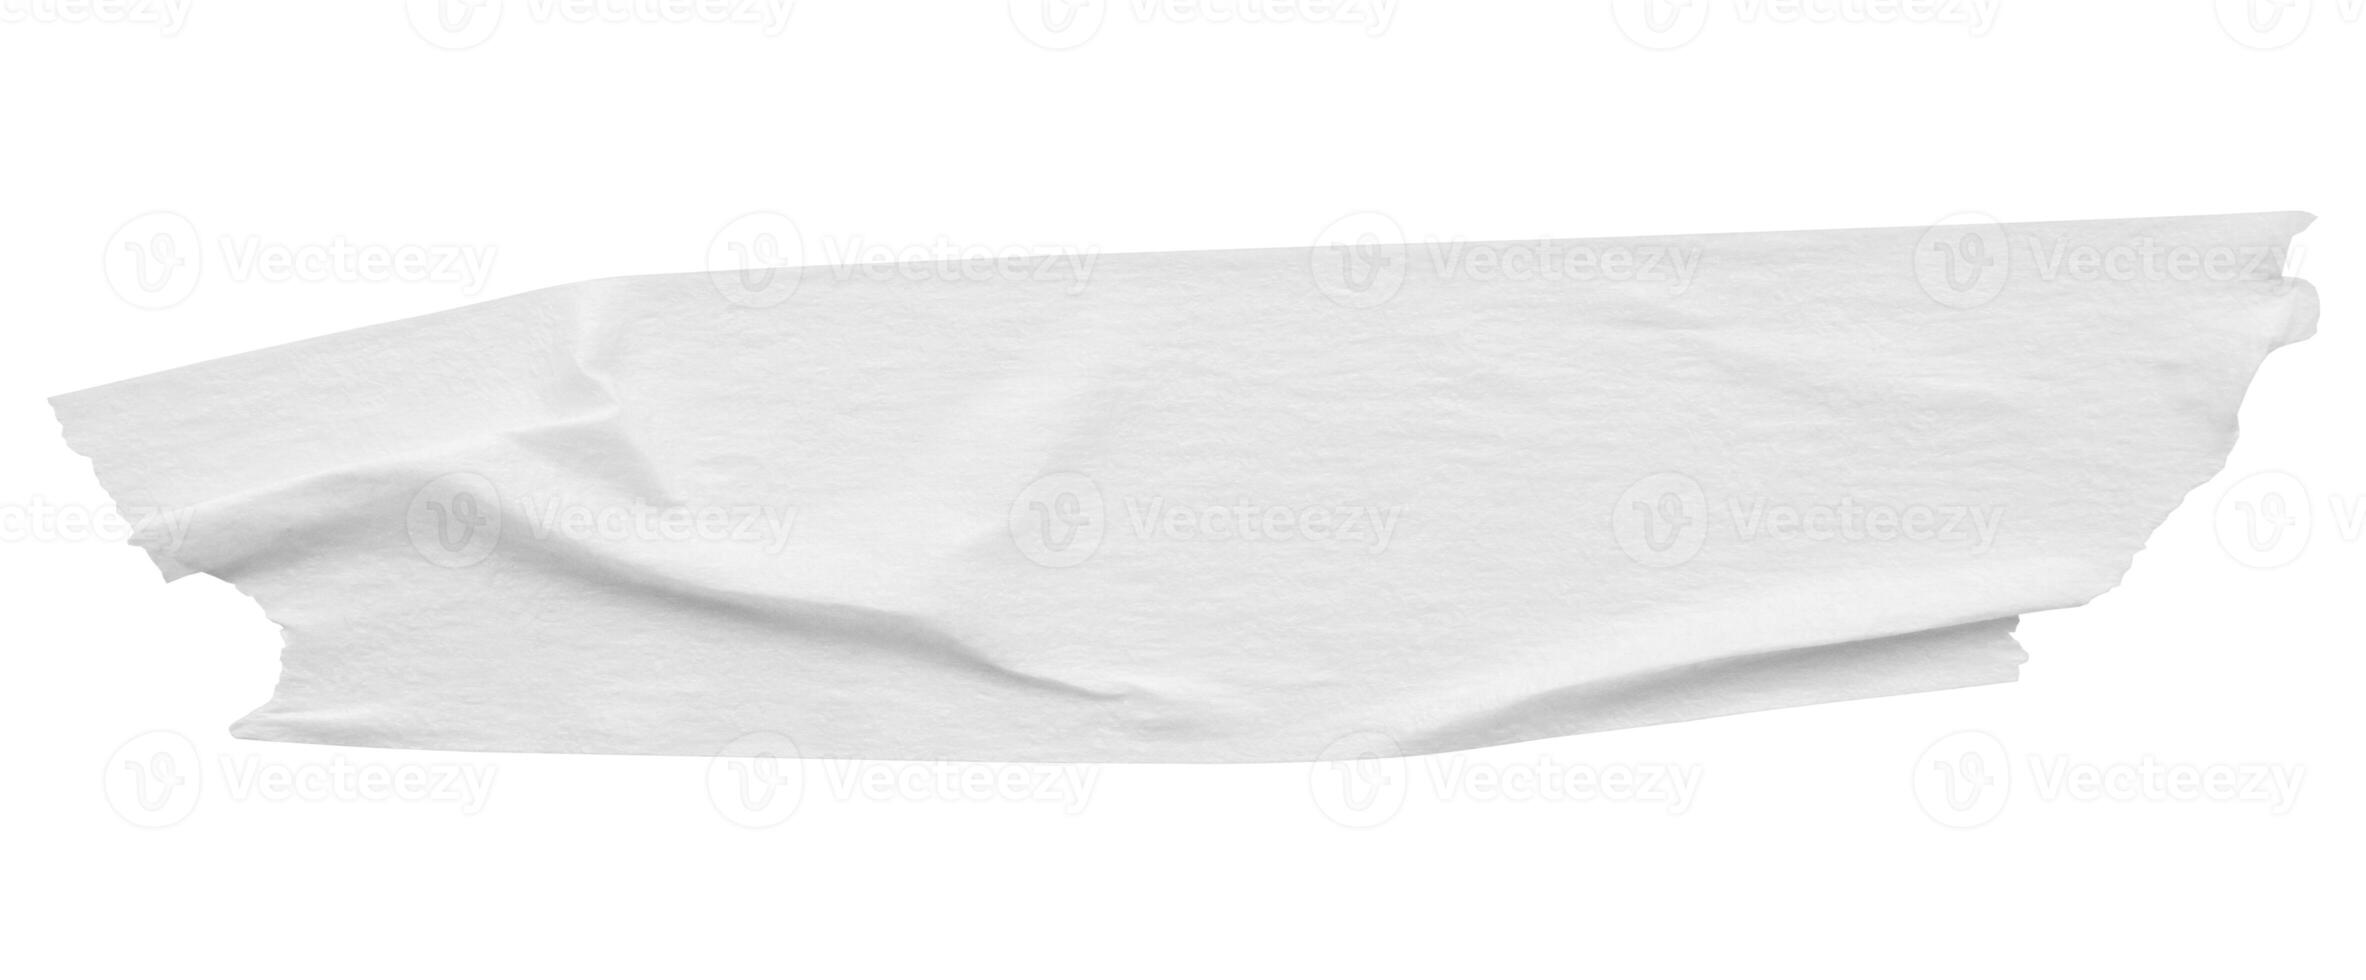 branco adesivo papel fita isolado em branco fundo foto